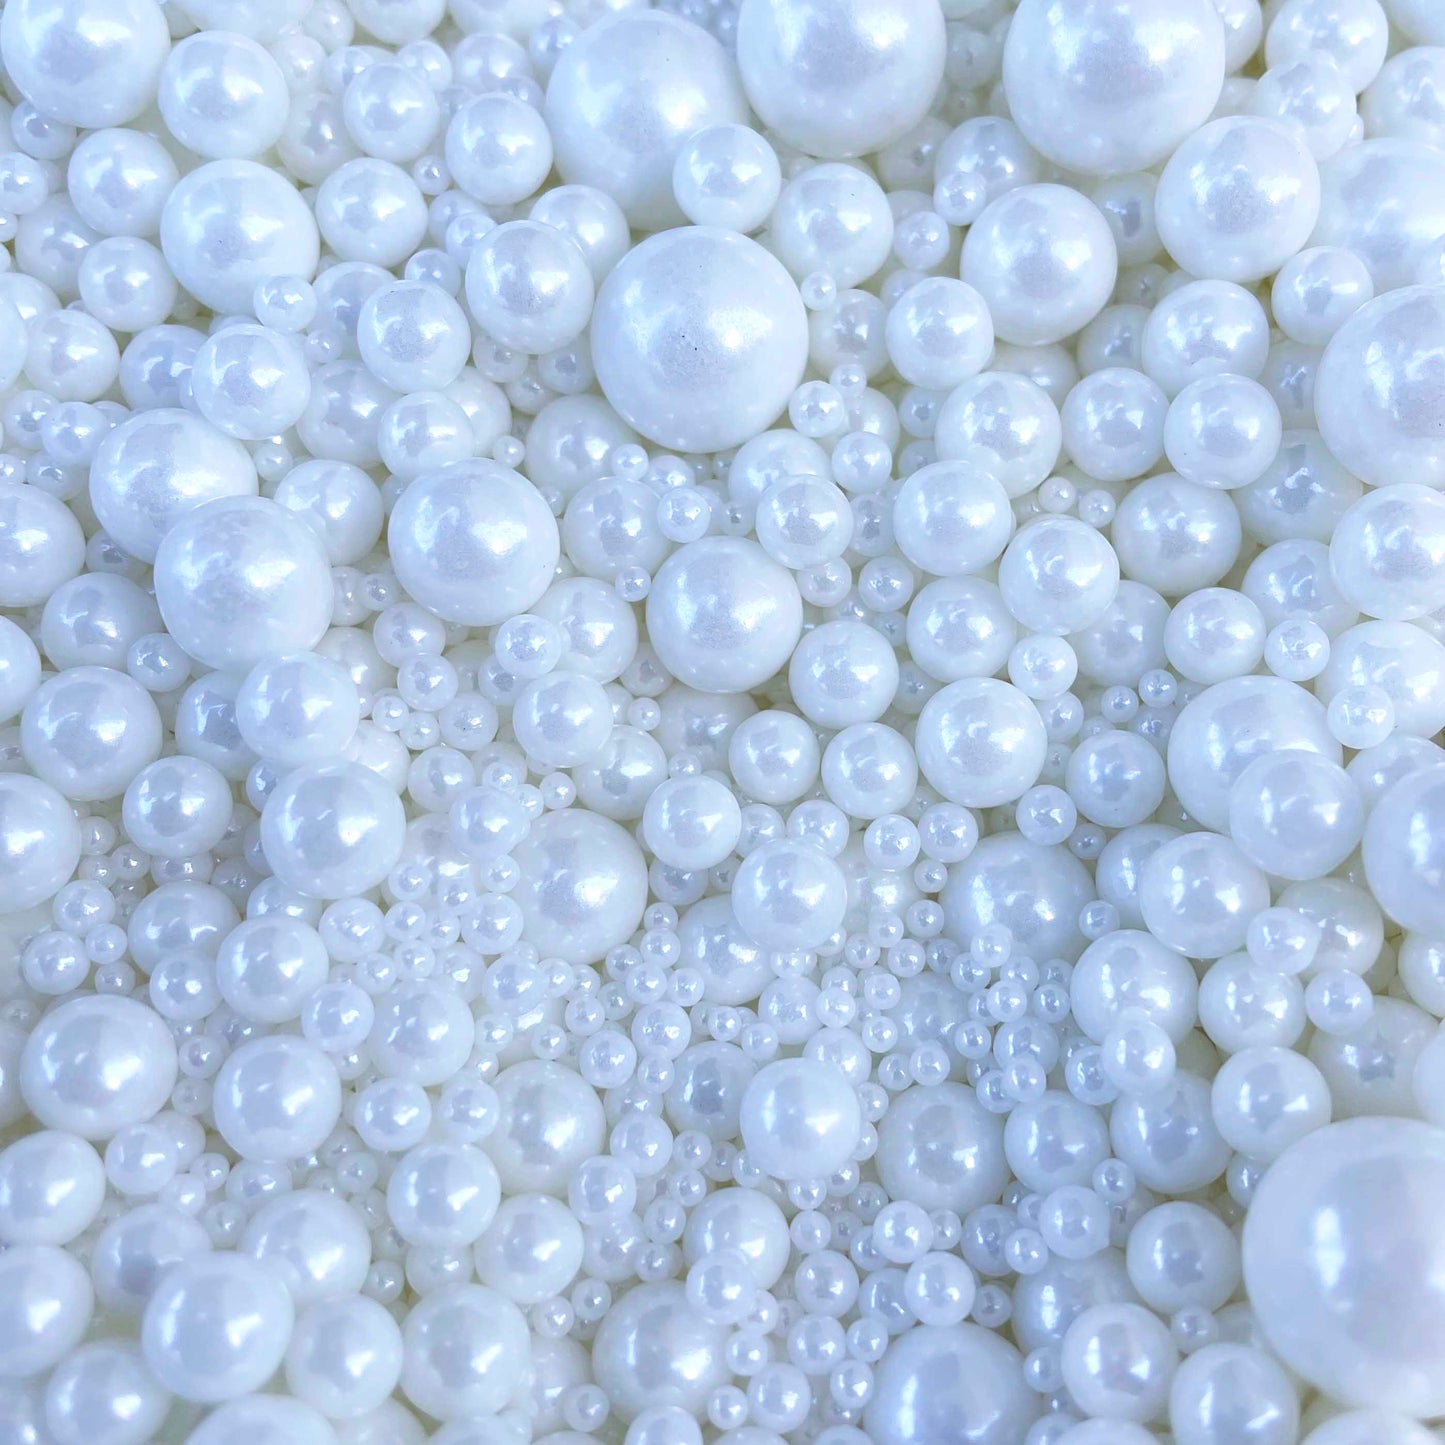 Shiny White Pearls